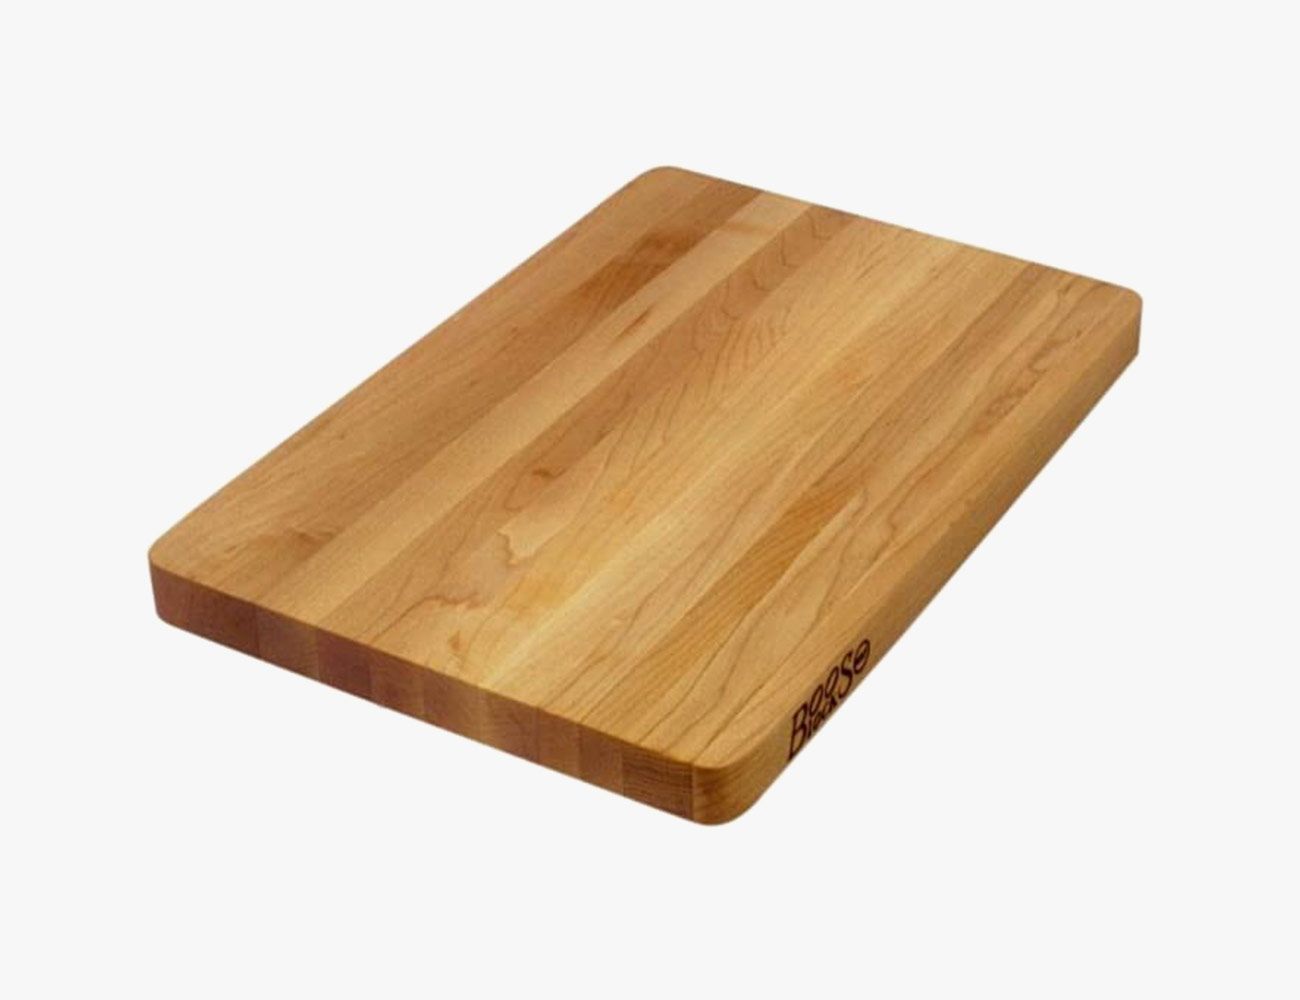 https://hips.hearstapps.com/vader-prod.s3.amazonaws.com/1647372113-john-boos-block-chop-n-slice-maple-wood-edge-grain-reversible-cutting-board-1647372105.jpg